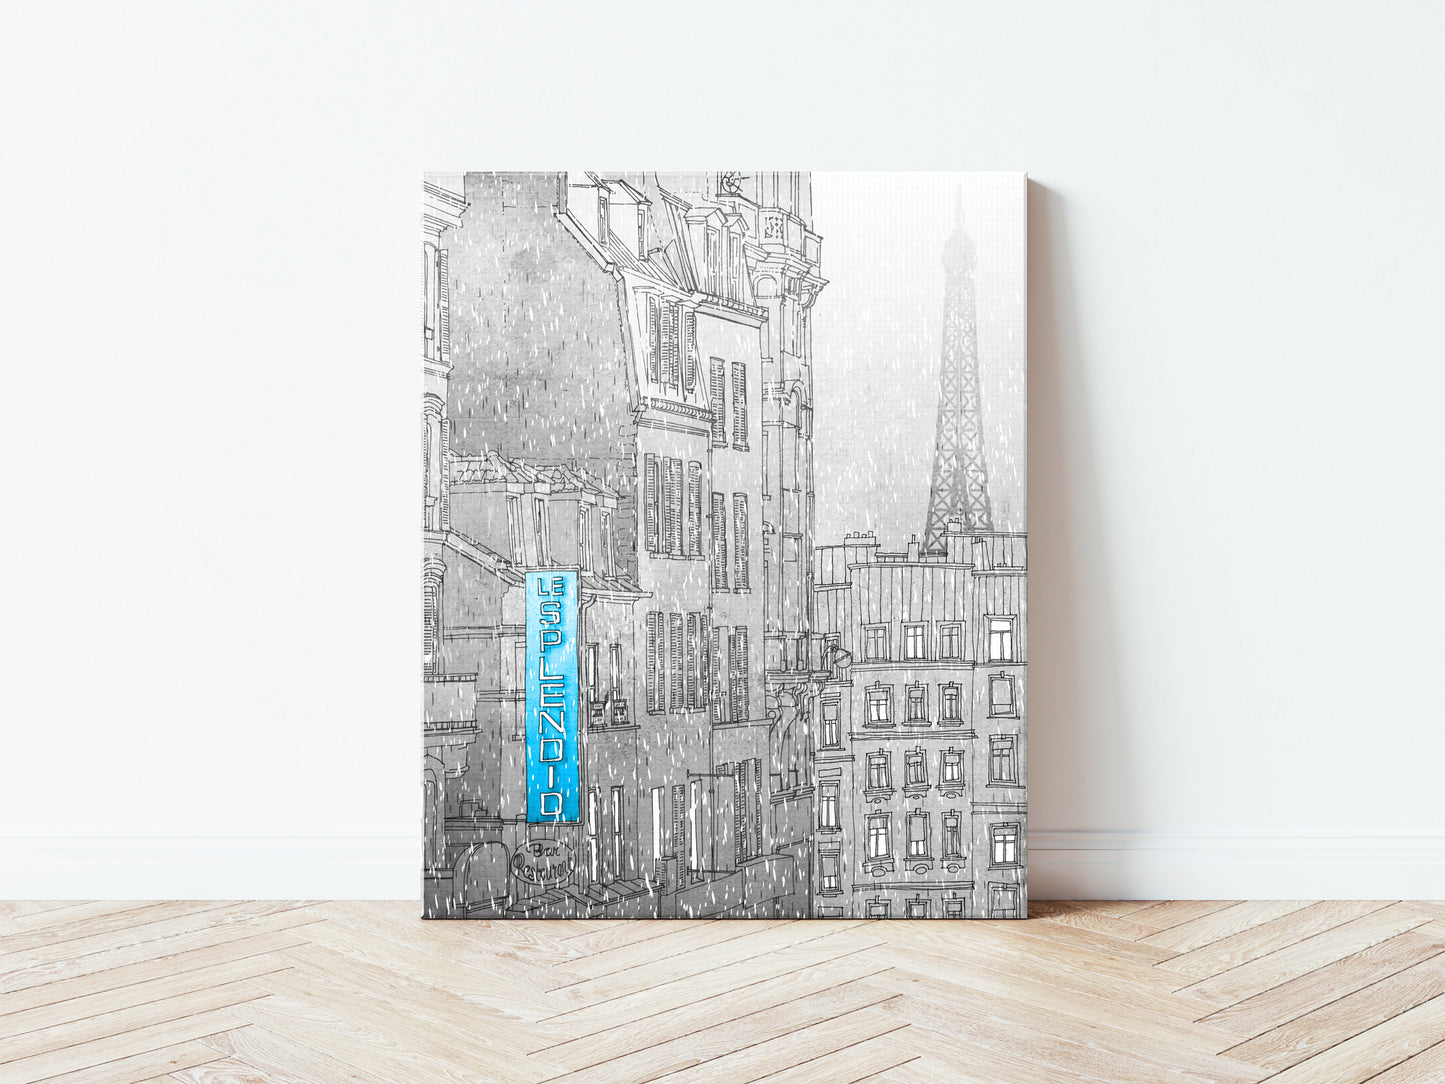 Paris in Winter (blue) - Canvas Art Print